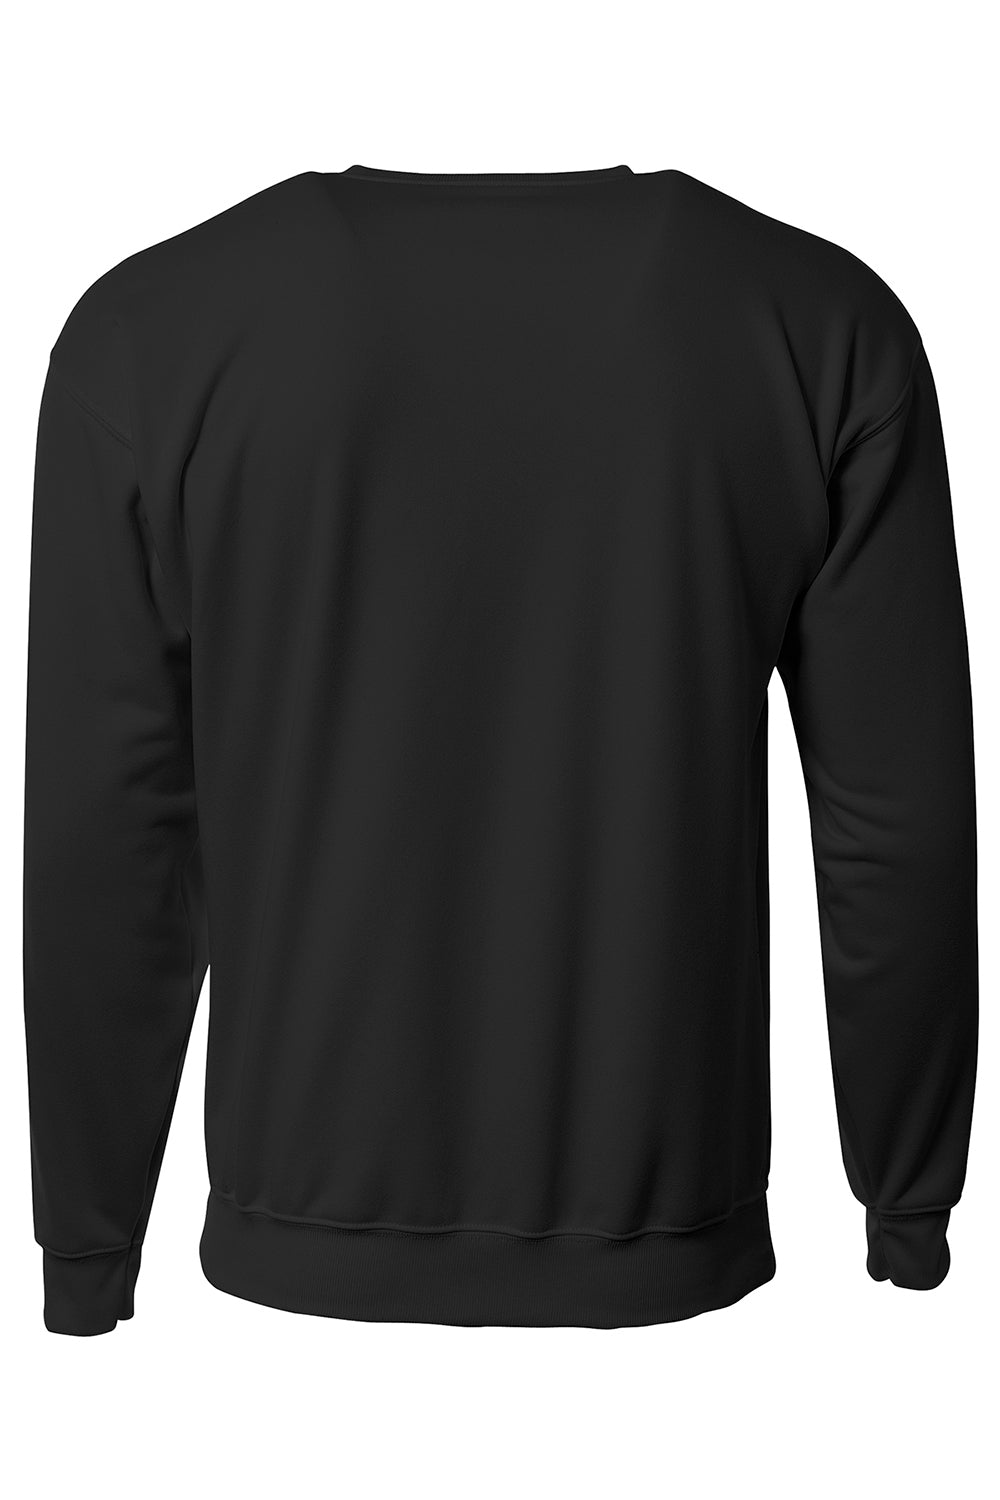 A4 N4275 Mens Sprint Tech Fleece Crewneck Sweatshirt Black Flat Back